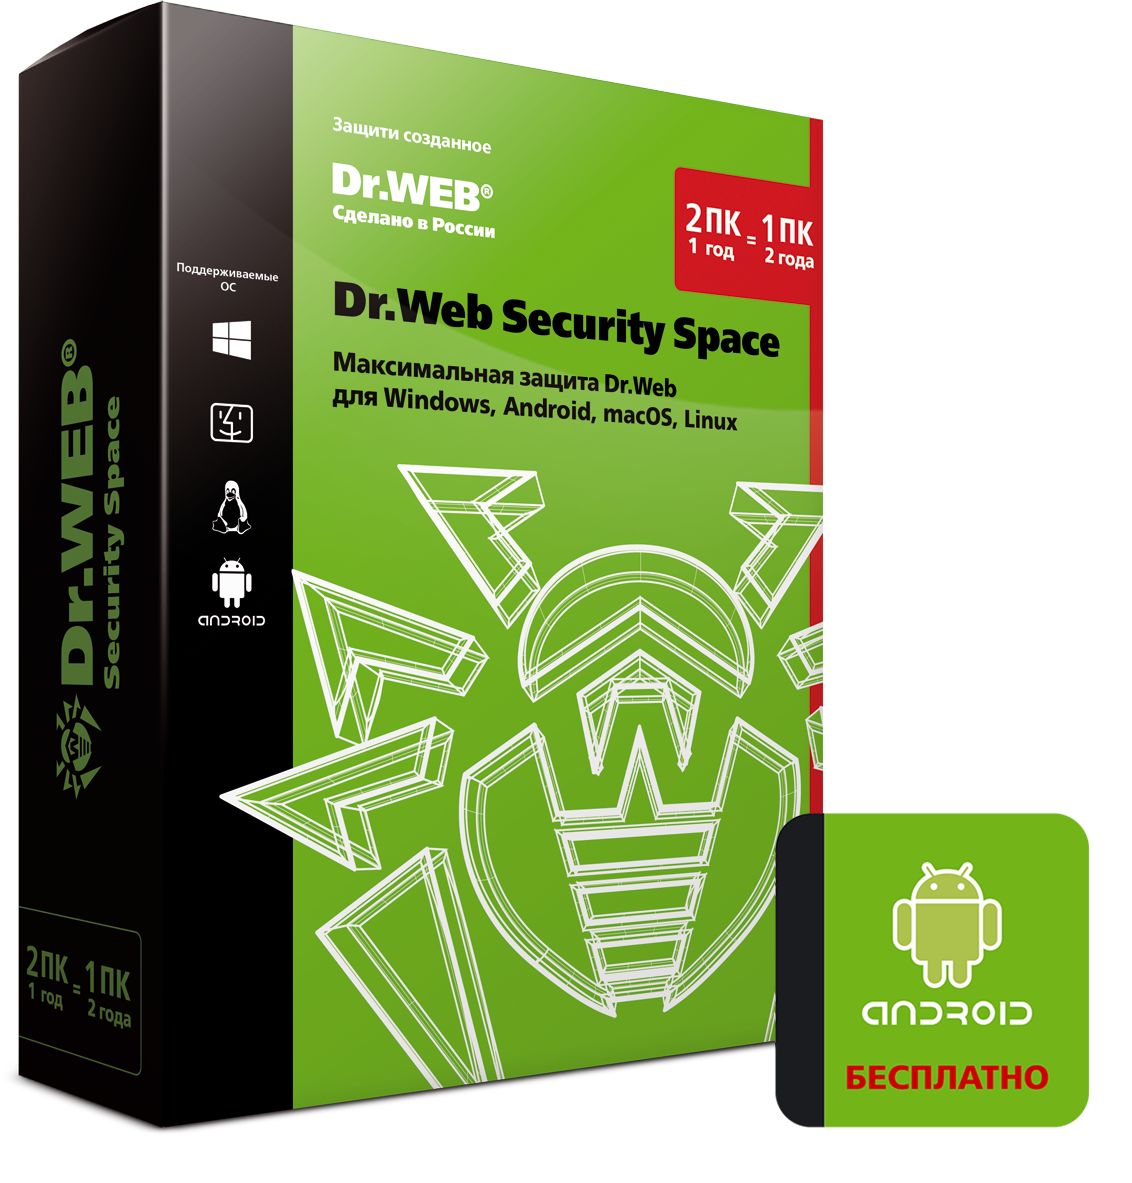 Антивирус Dr.Web Security Space на 1 год на 2 ПК [BHW-B-12M-2-A3] (Box) антивирус drweb security space продление на 1 год на 2 пк [lhw bk 12m 2 b3] электронный ключ